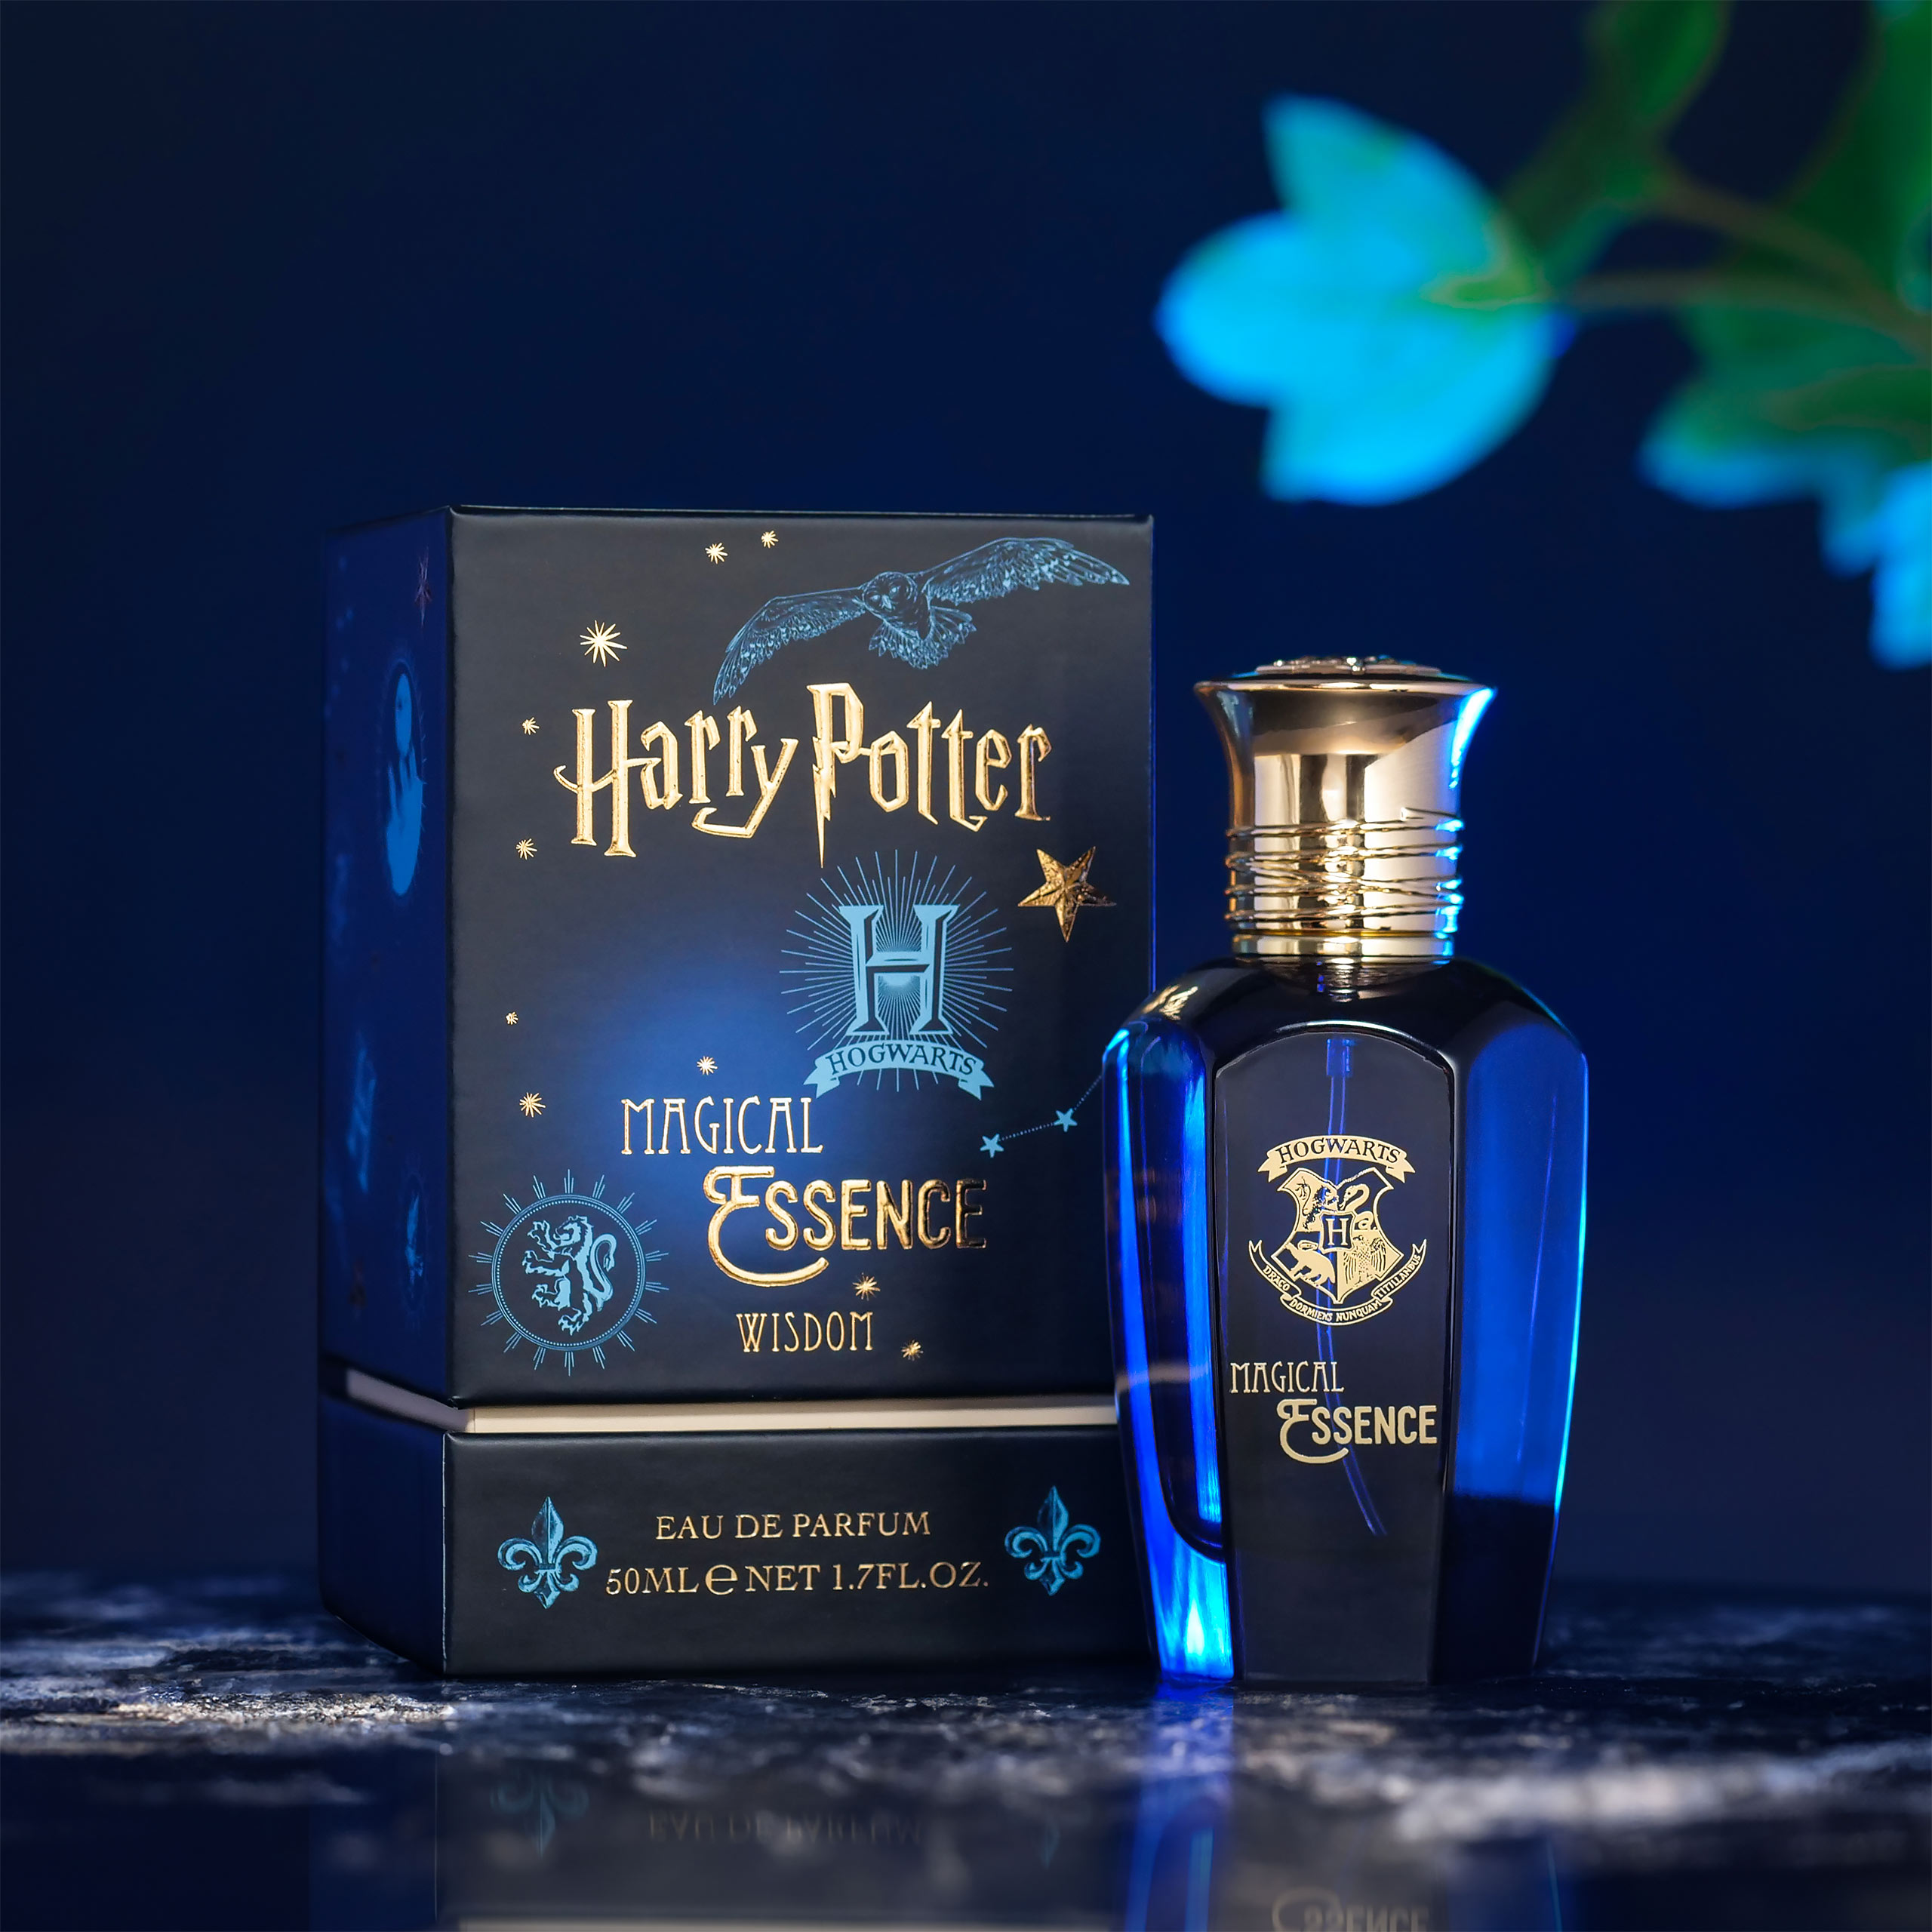 Harry Potter - Magical Essence Wisdom Eau de Parfum